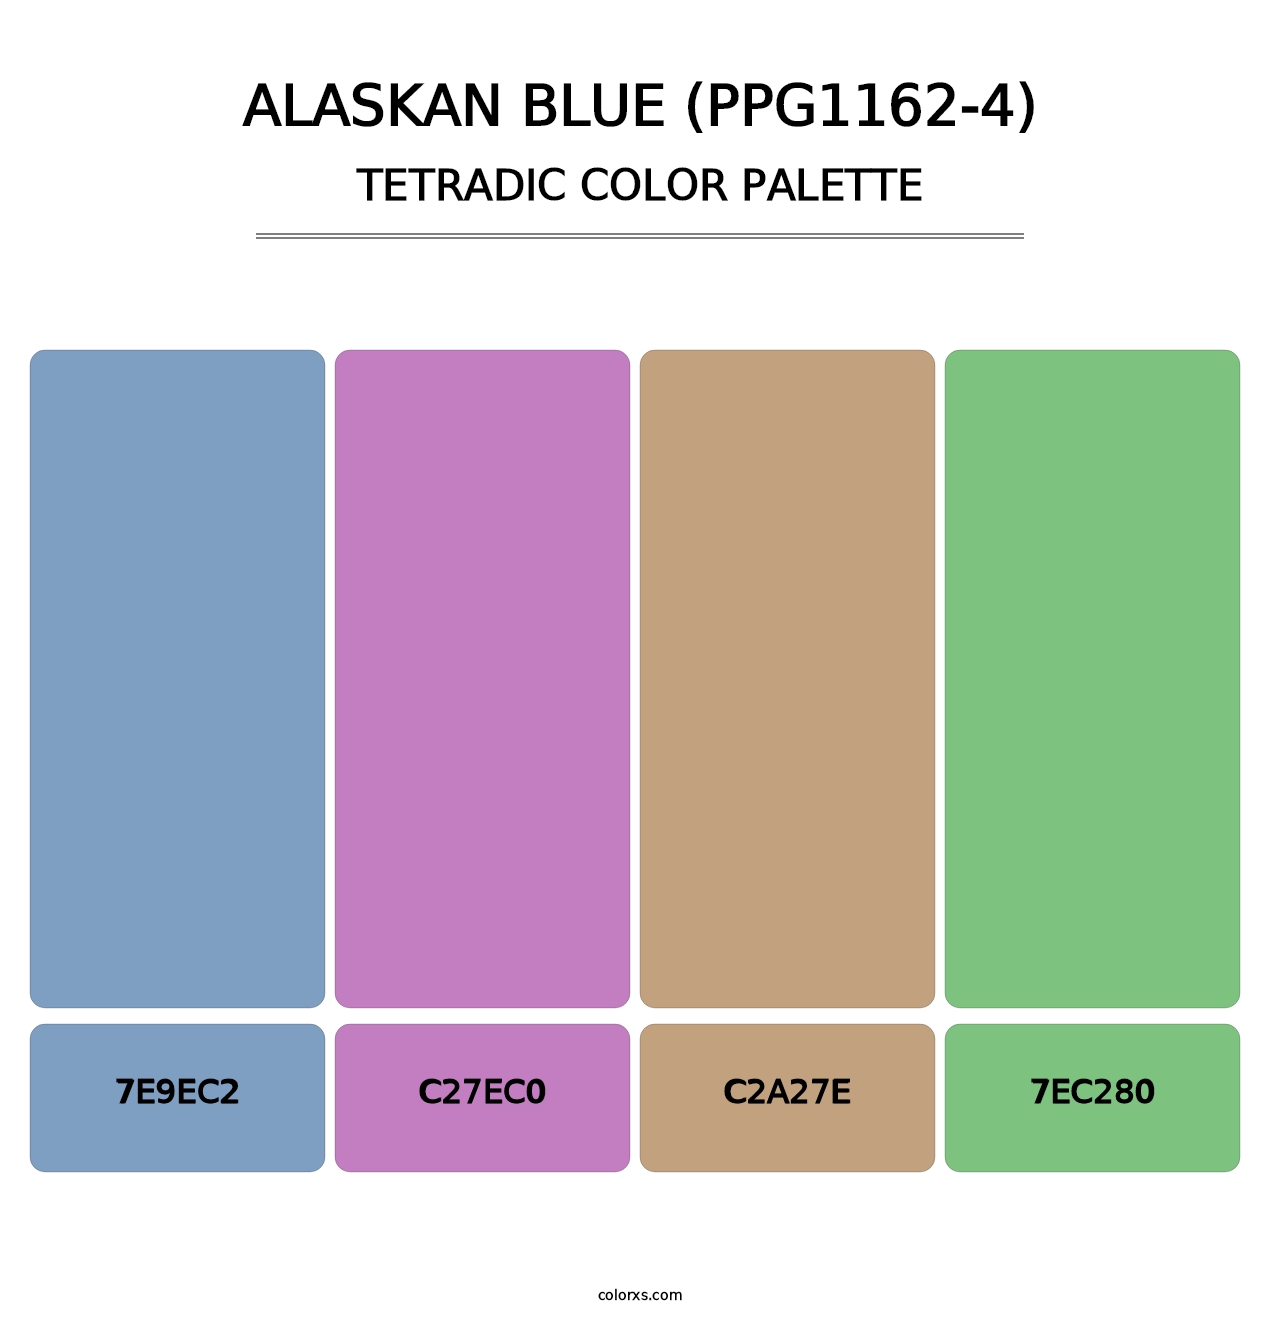 Alaskan Blue (PPG1162-4) - Tetradic Color Palette